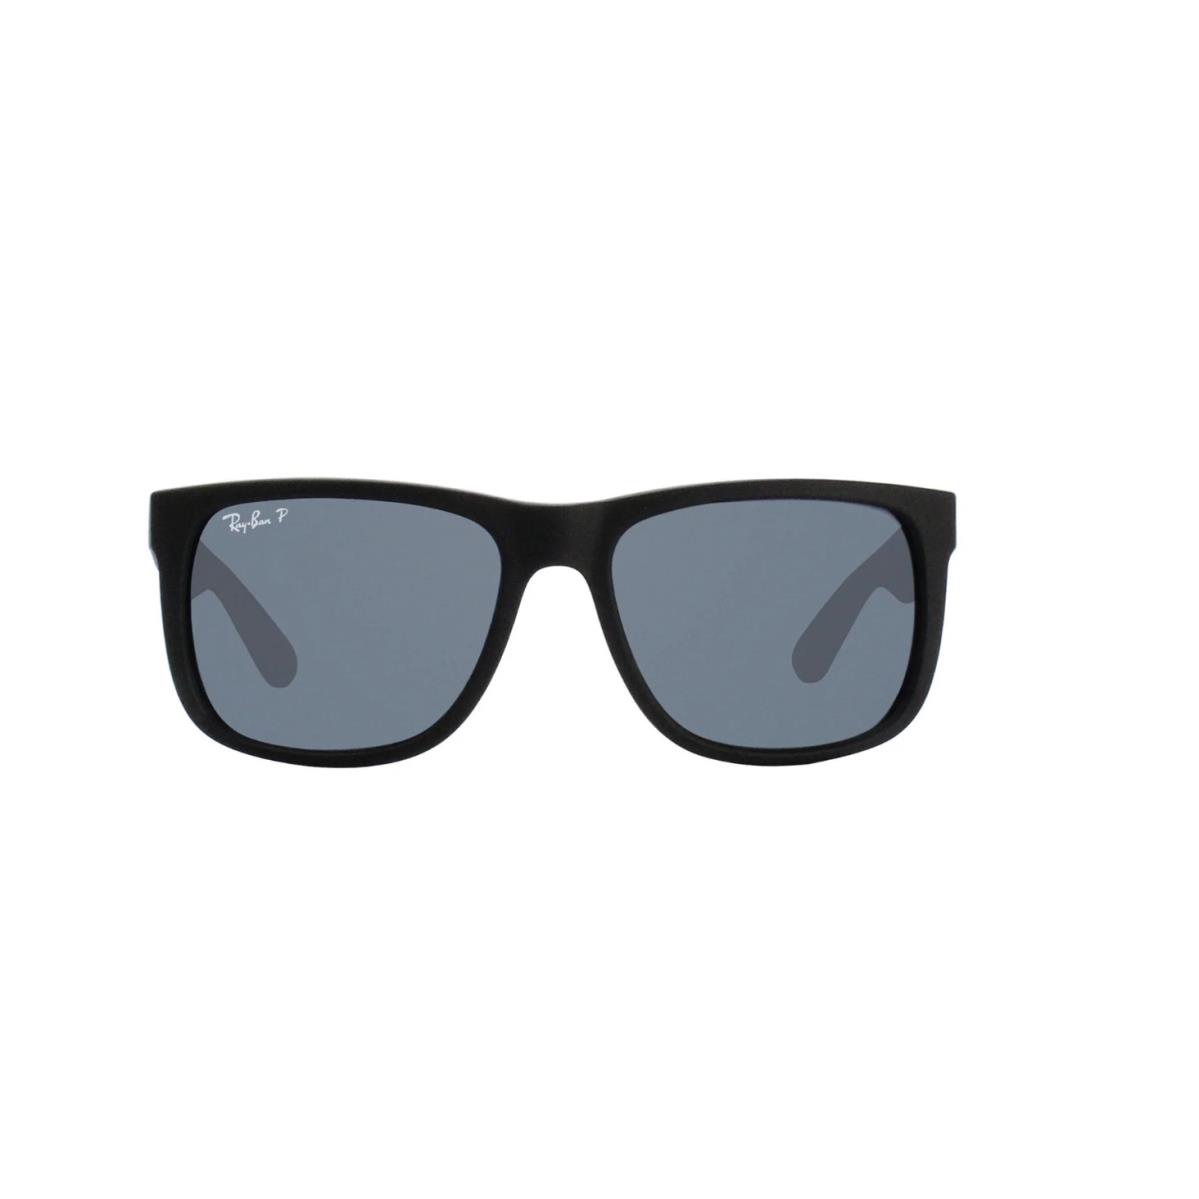 Ray-ban Justin Black Rubber/dark Blue Polarized 54mm Sunglasses RB4165 622/2V 54 - Frame: Black, Lens: Black